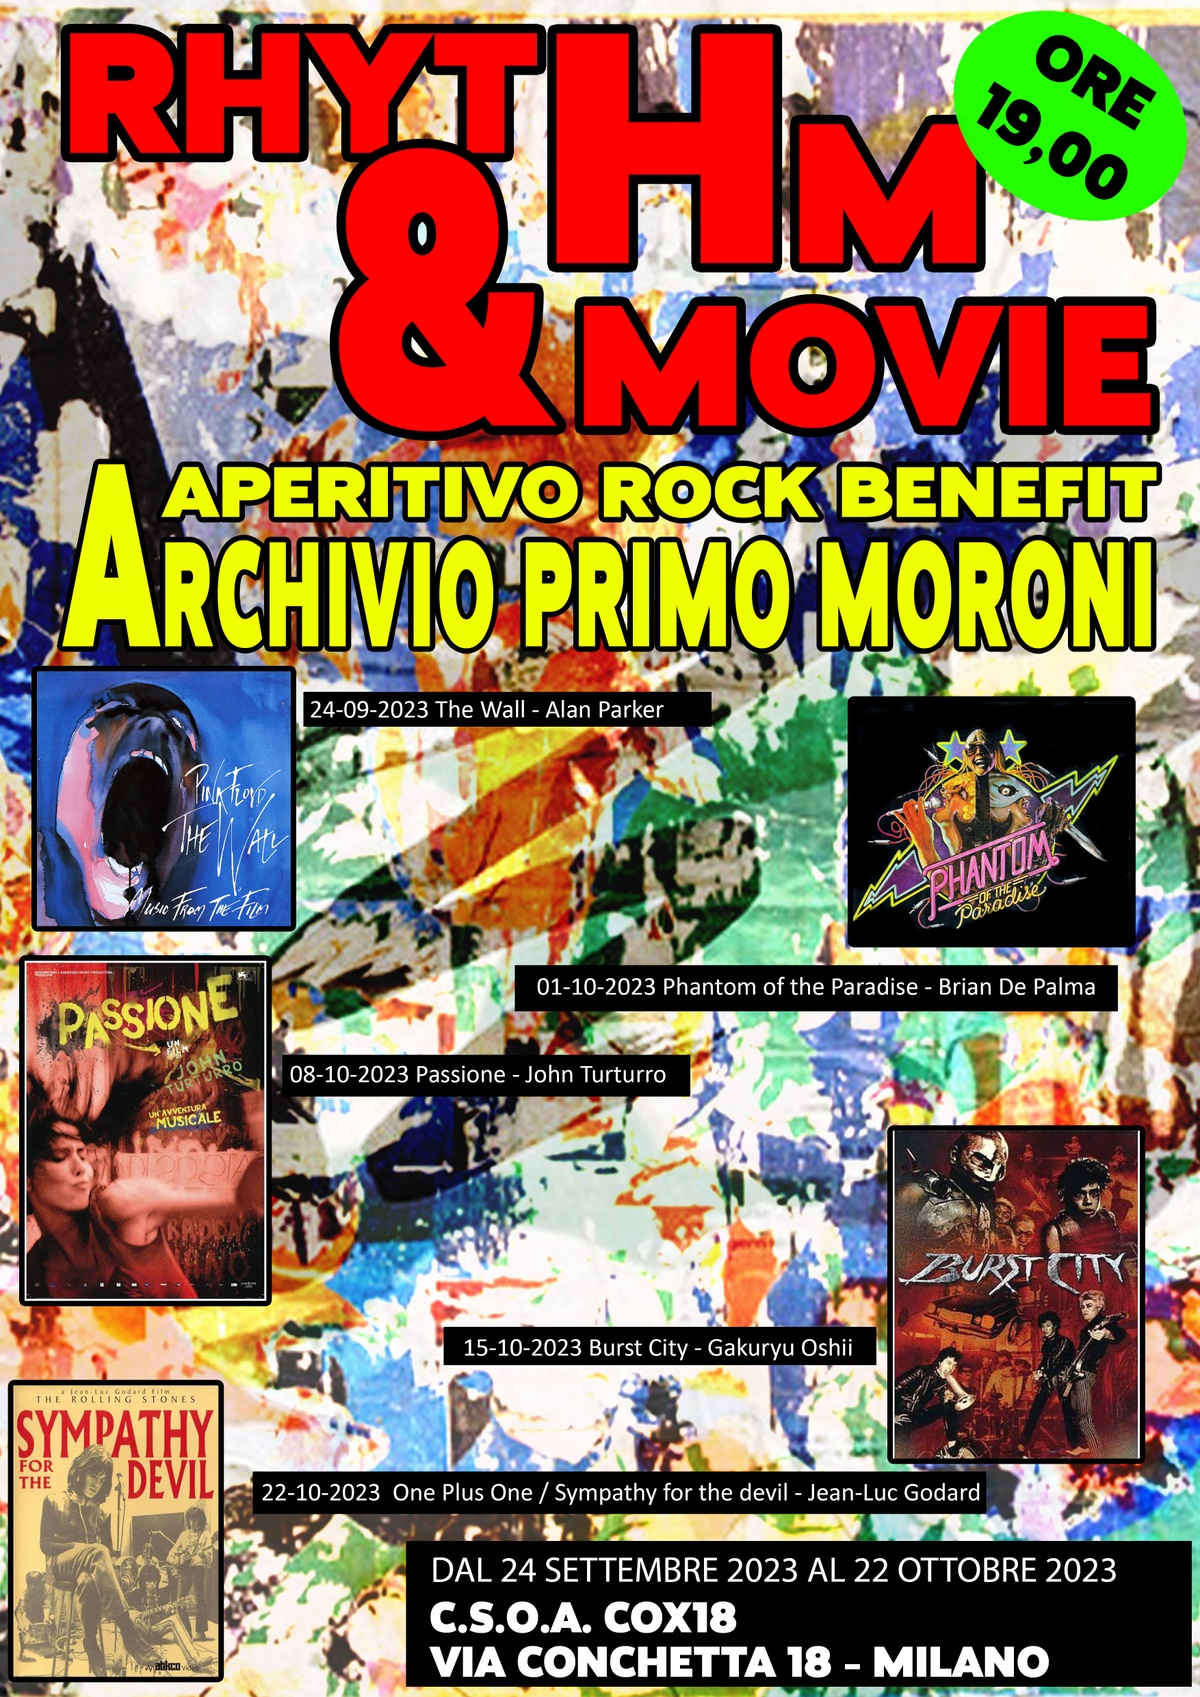 RHYTHM & MOVIE – APERITIVO ROCK BENEFIT ARCHIVIO PRIMO MORONI